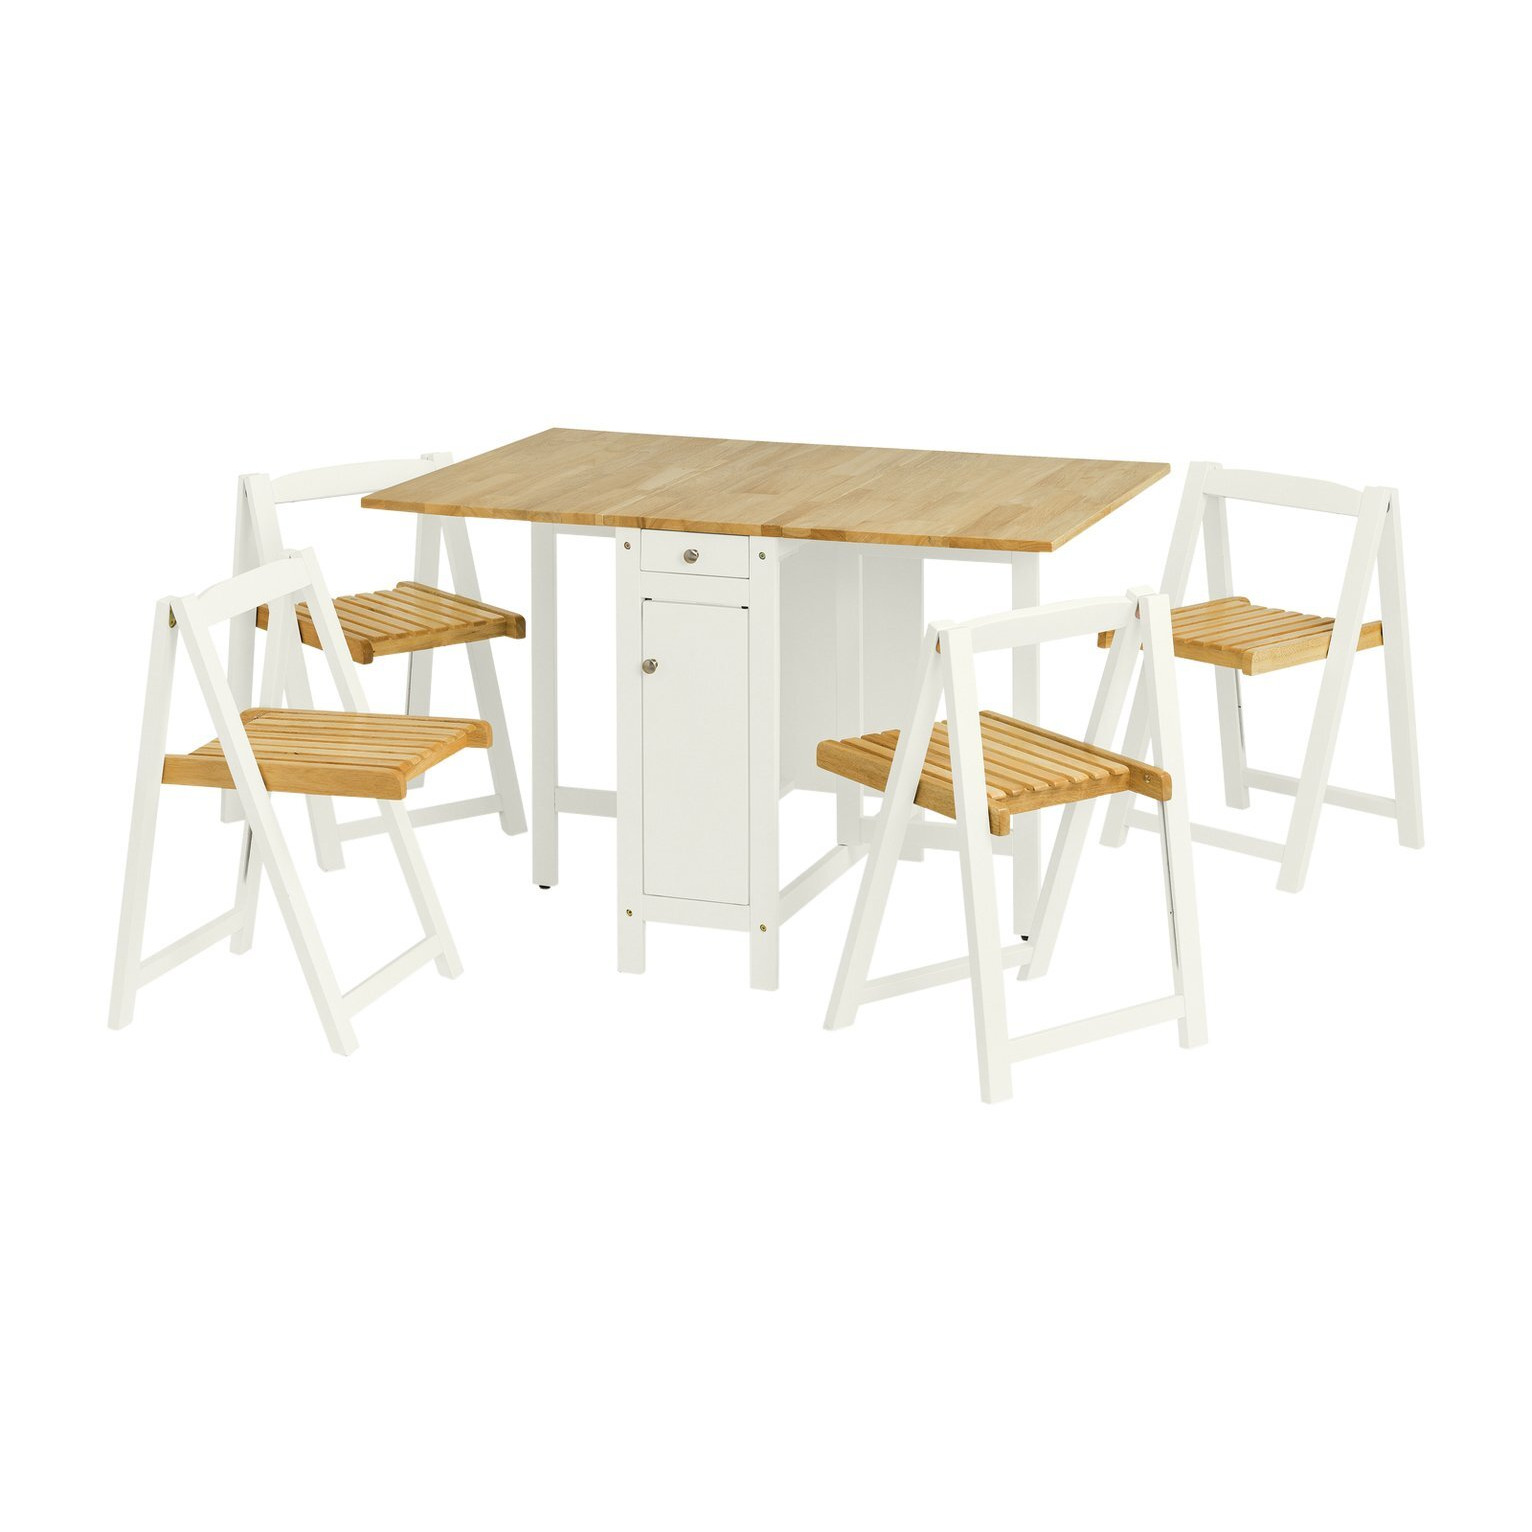 Julian Bowen Savoy Dining Table & 4 Chairs - White & Natural - image 1